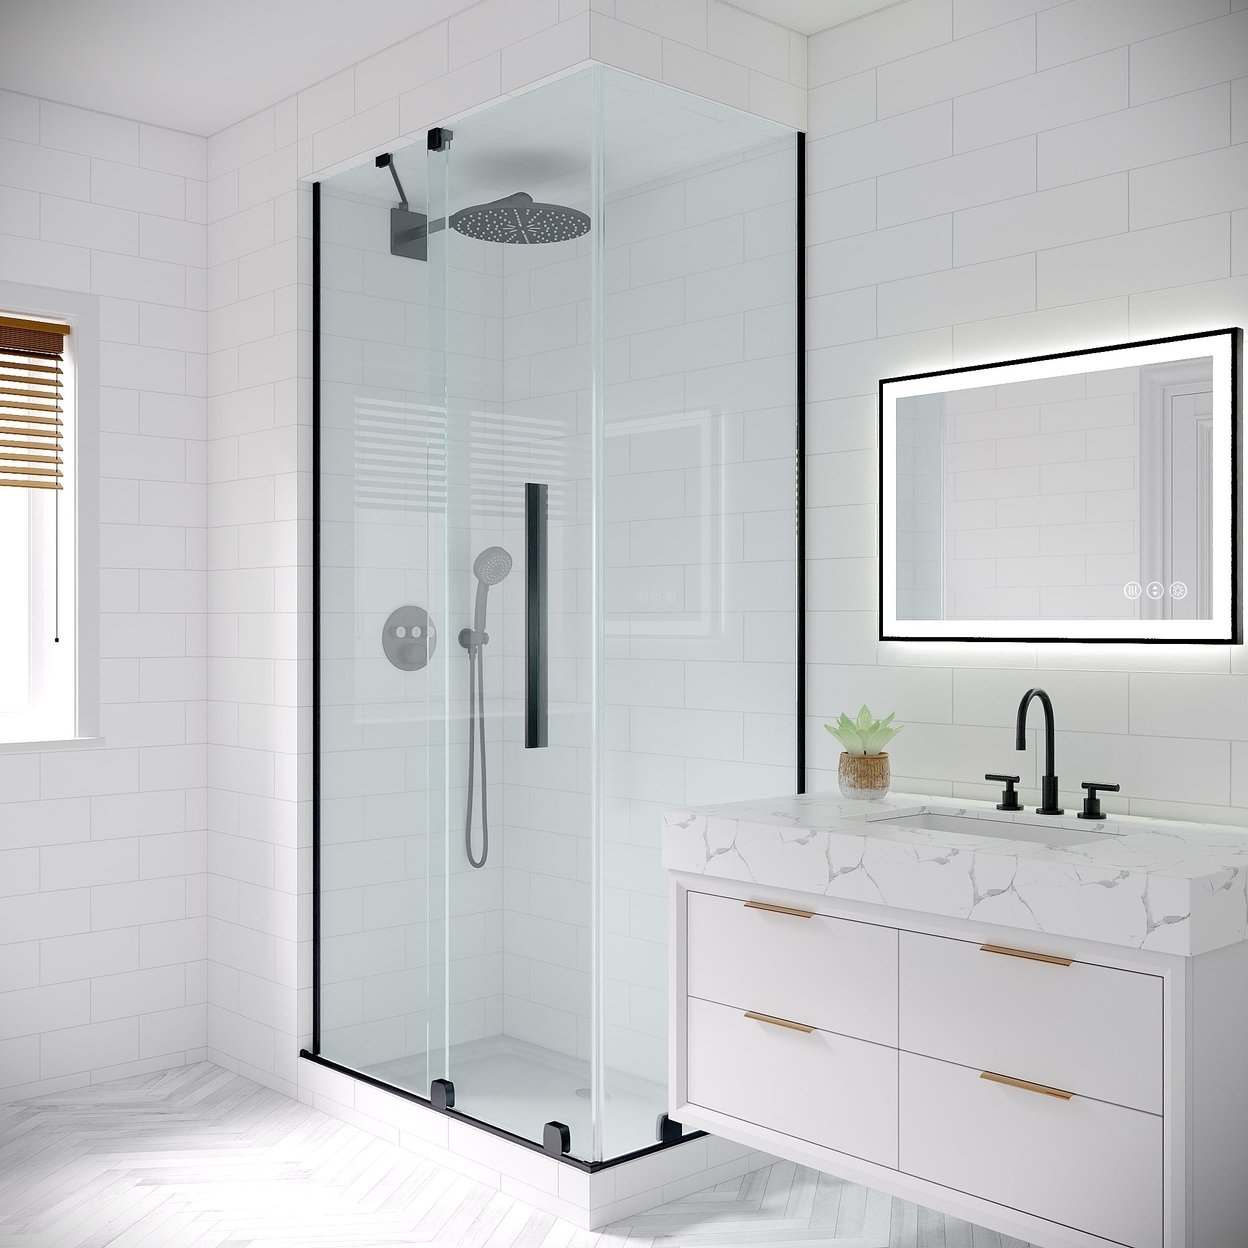 Apex-Noir 20x28 Framed LED Lighted Bathroom Mirror